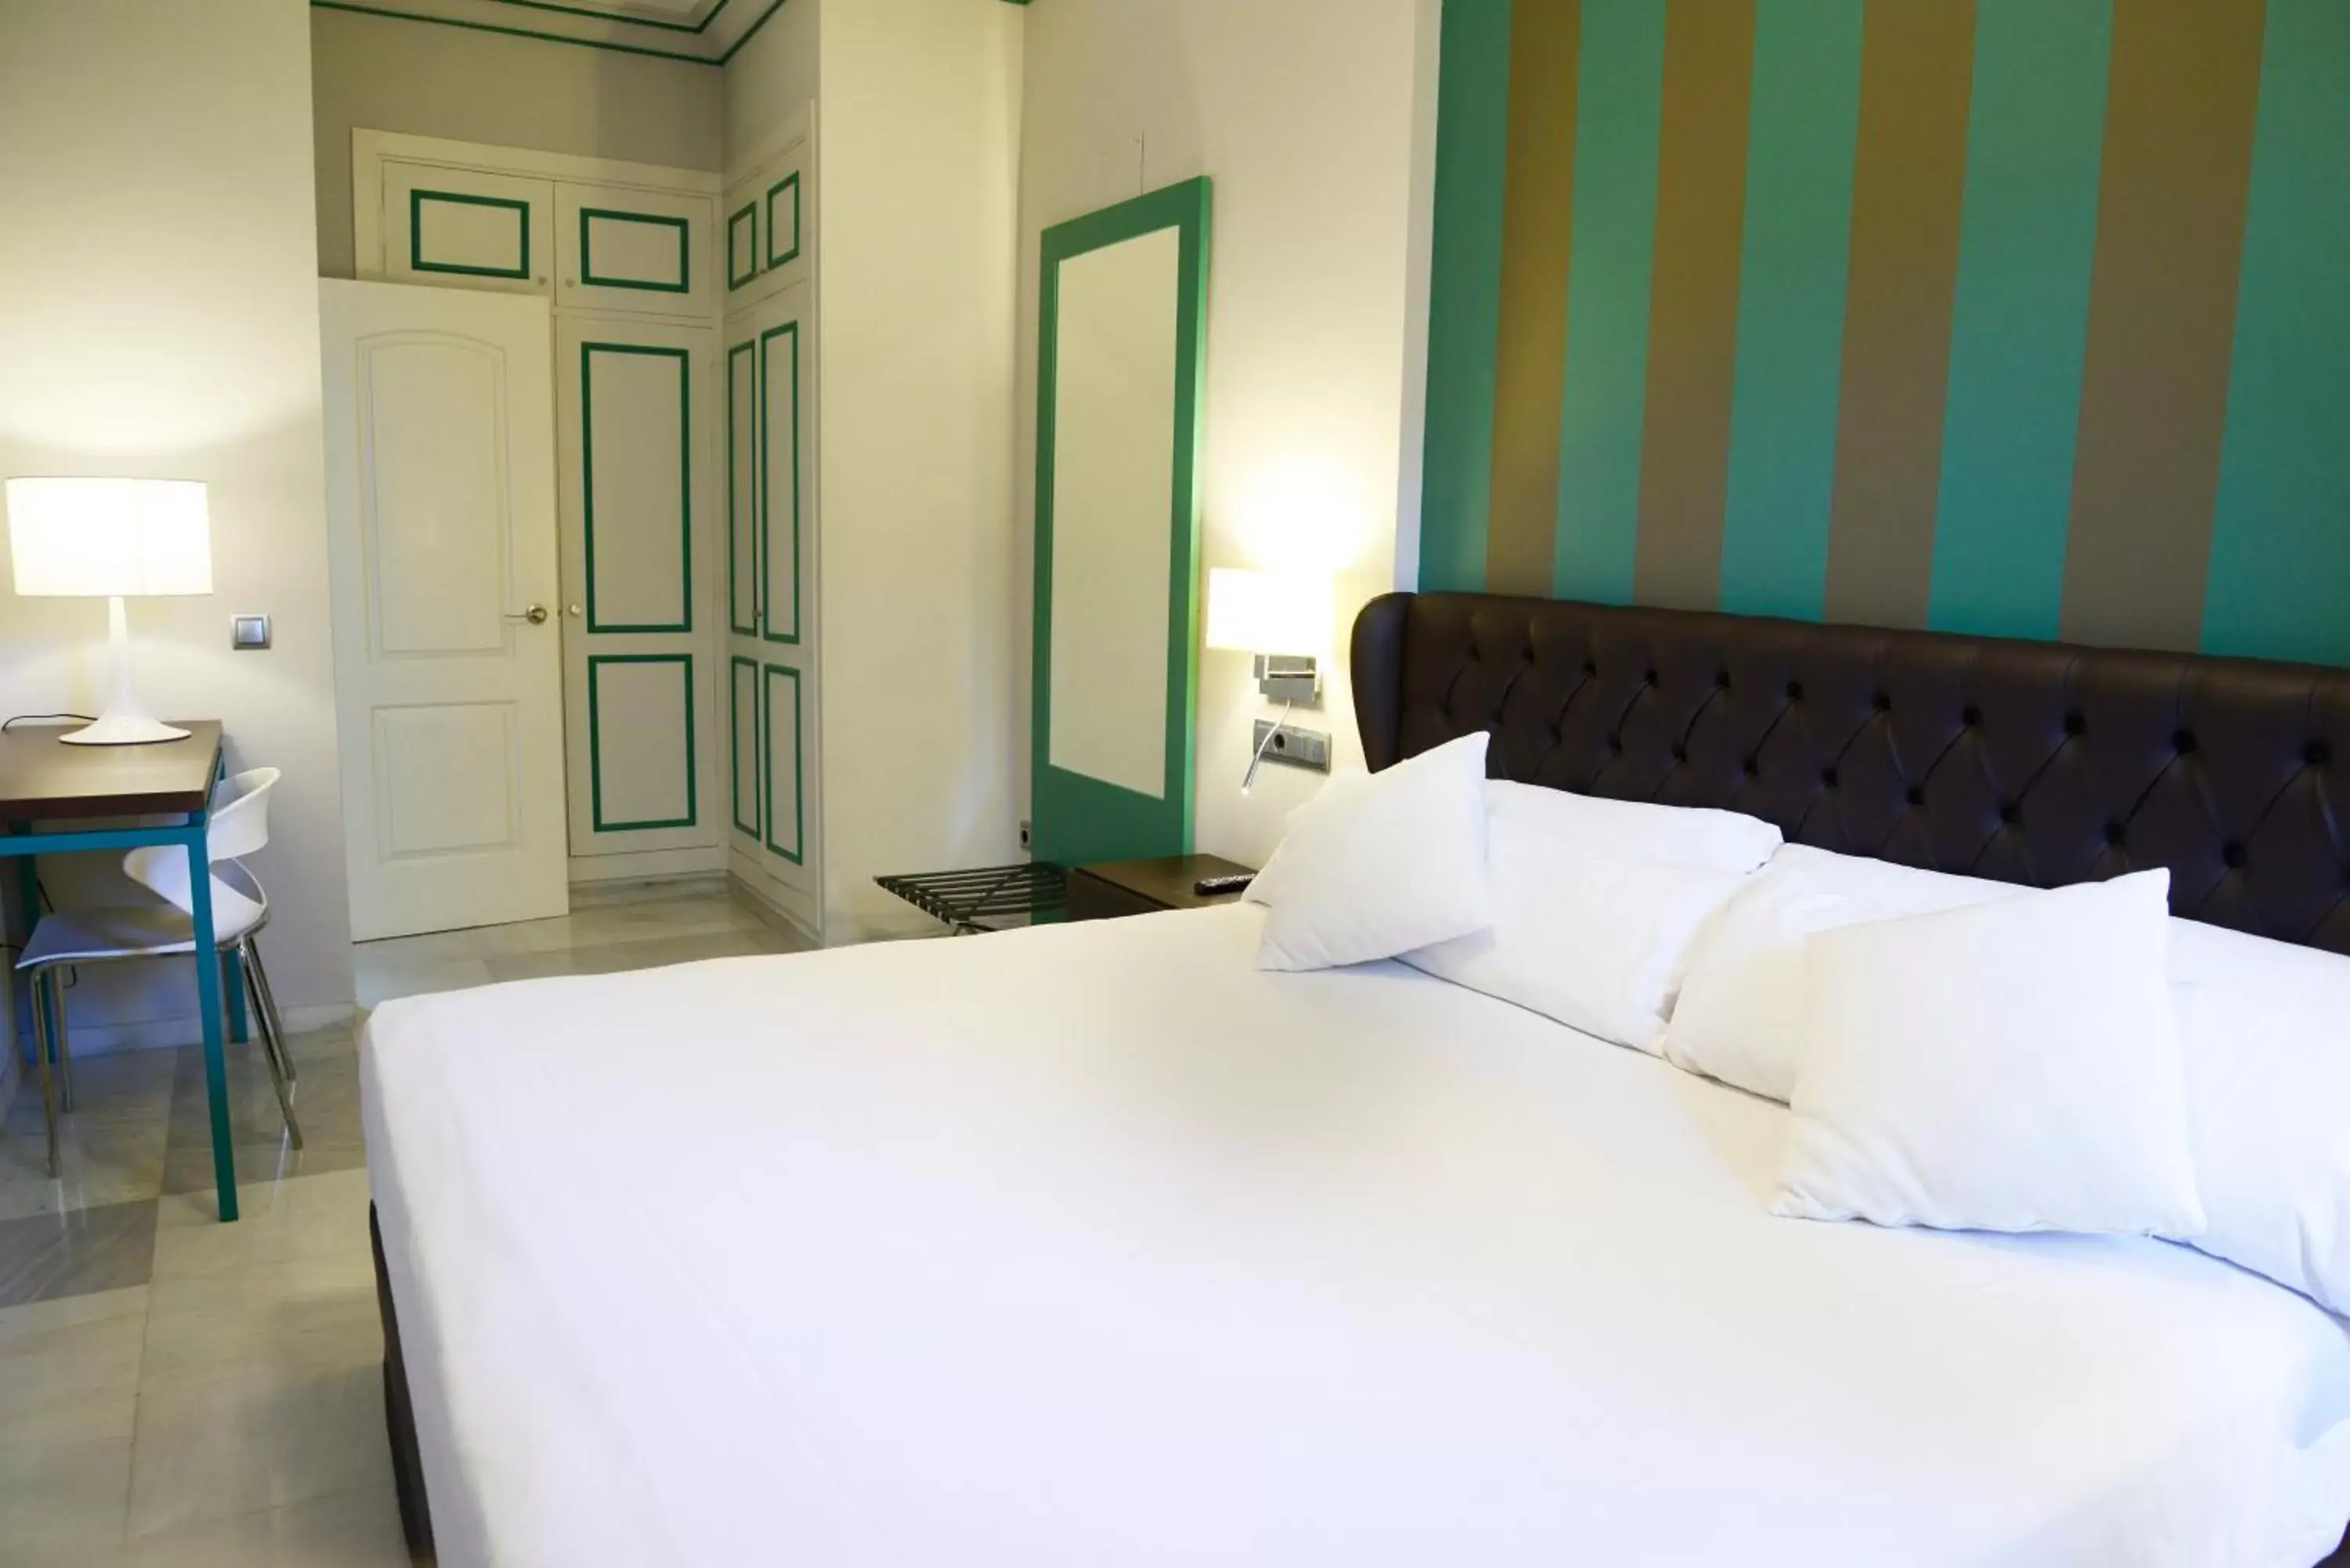 Bed, Room Photo in Hotel San Pablo Sevilla